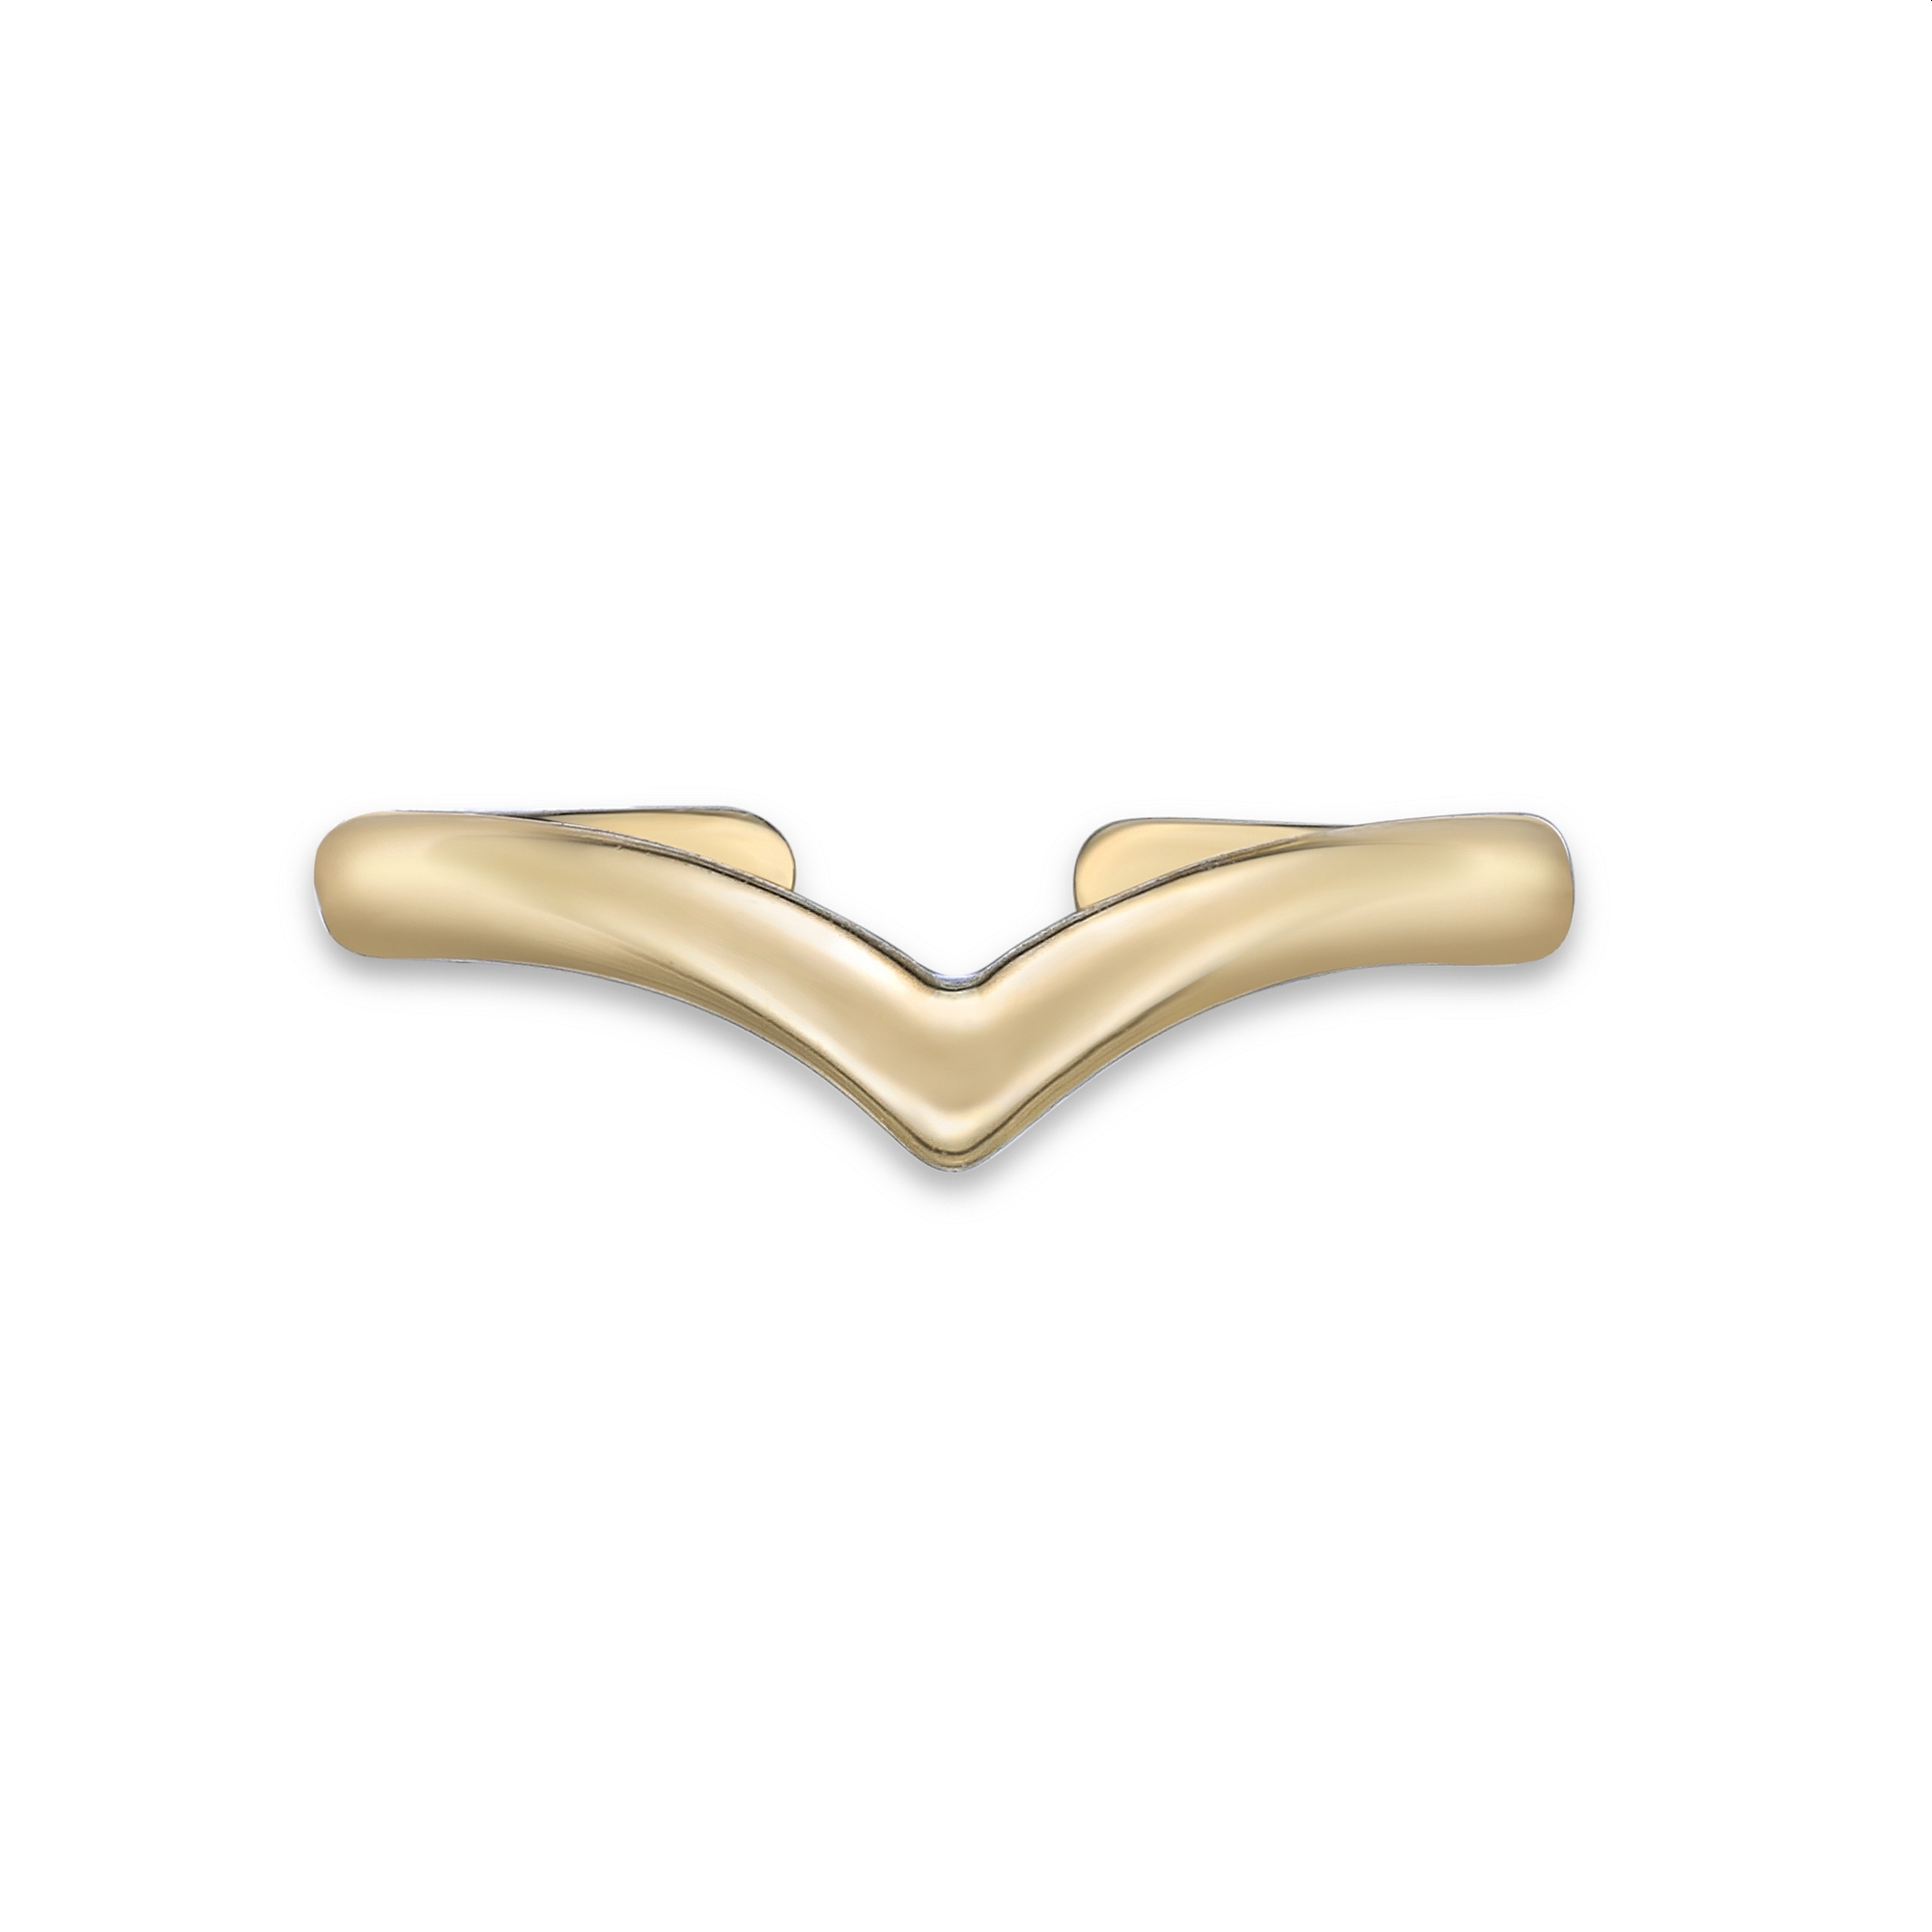 Lavari Jewelers Women's Chevron Band Adjustable Toe Ring, 10K Yellow Gold, 3 MM